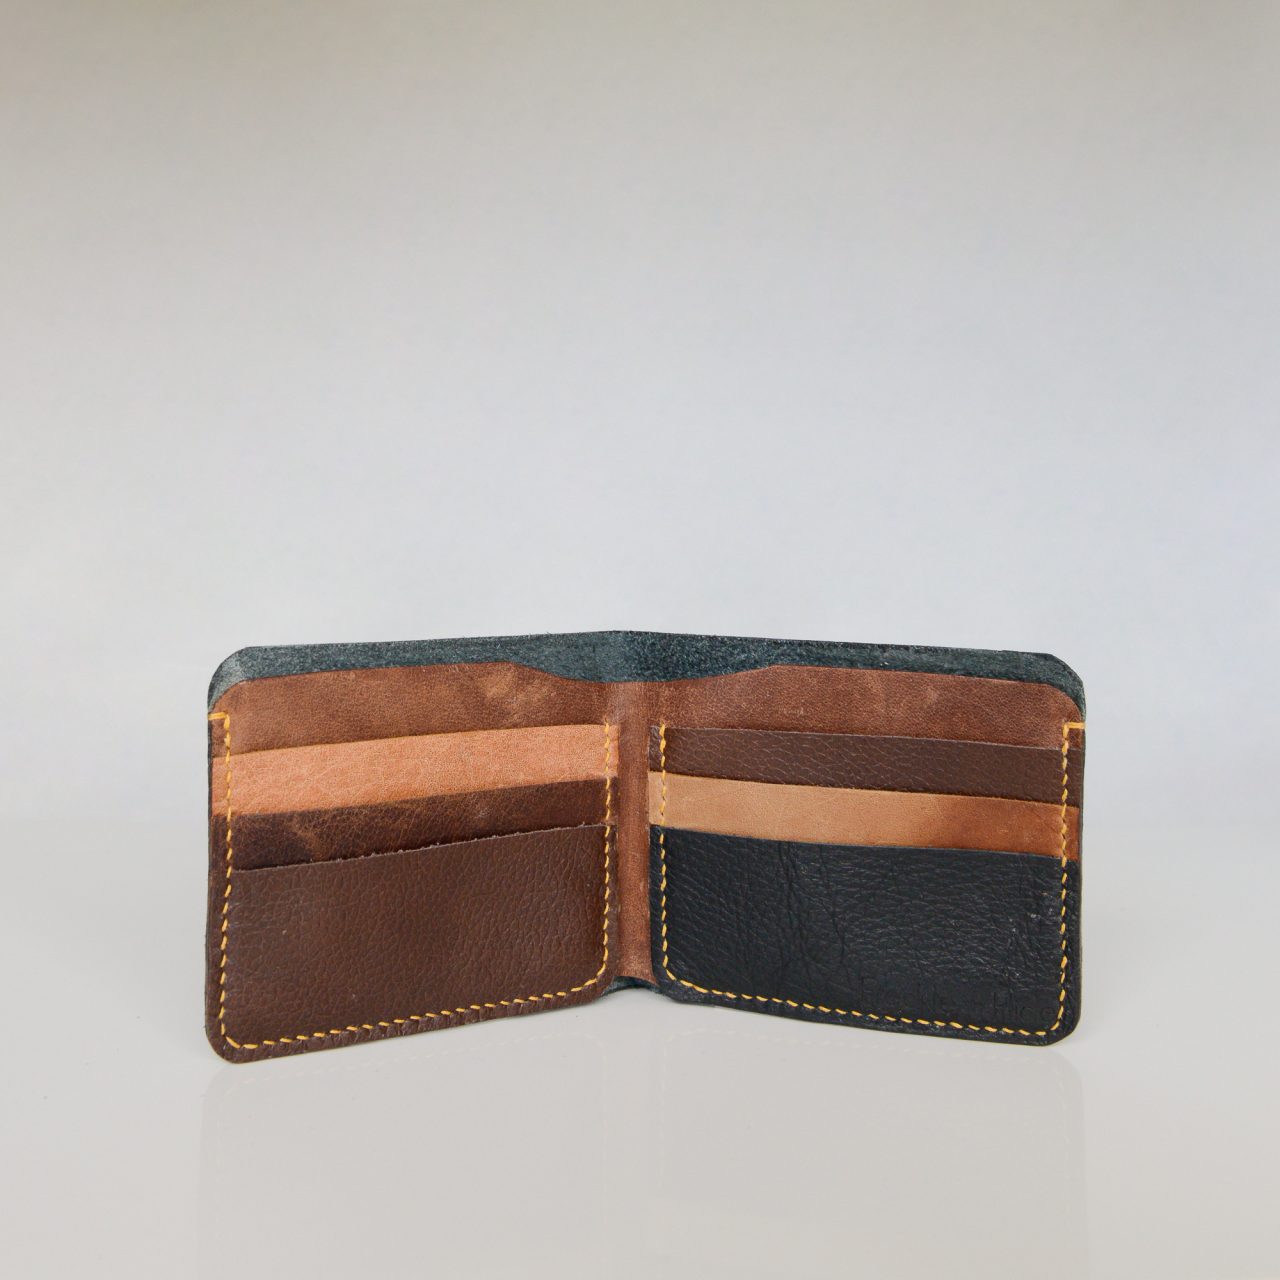 Brown and black bifold wallet handmade in Scotland